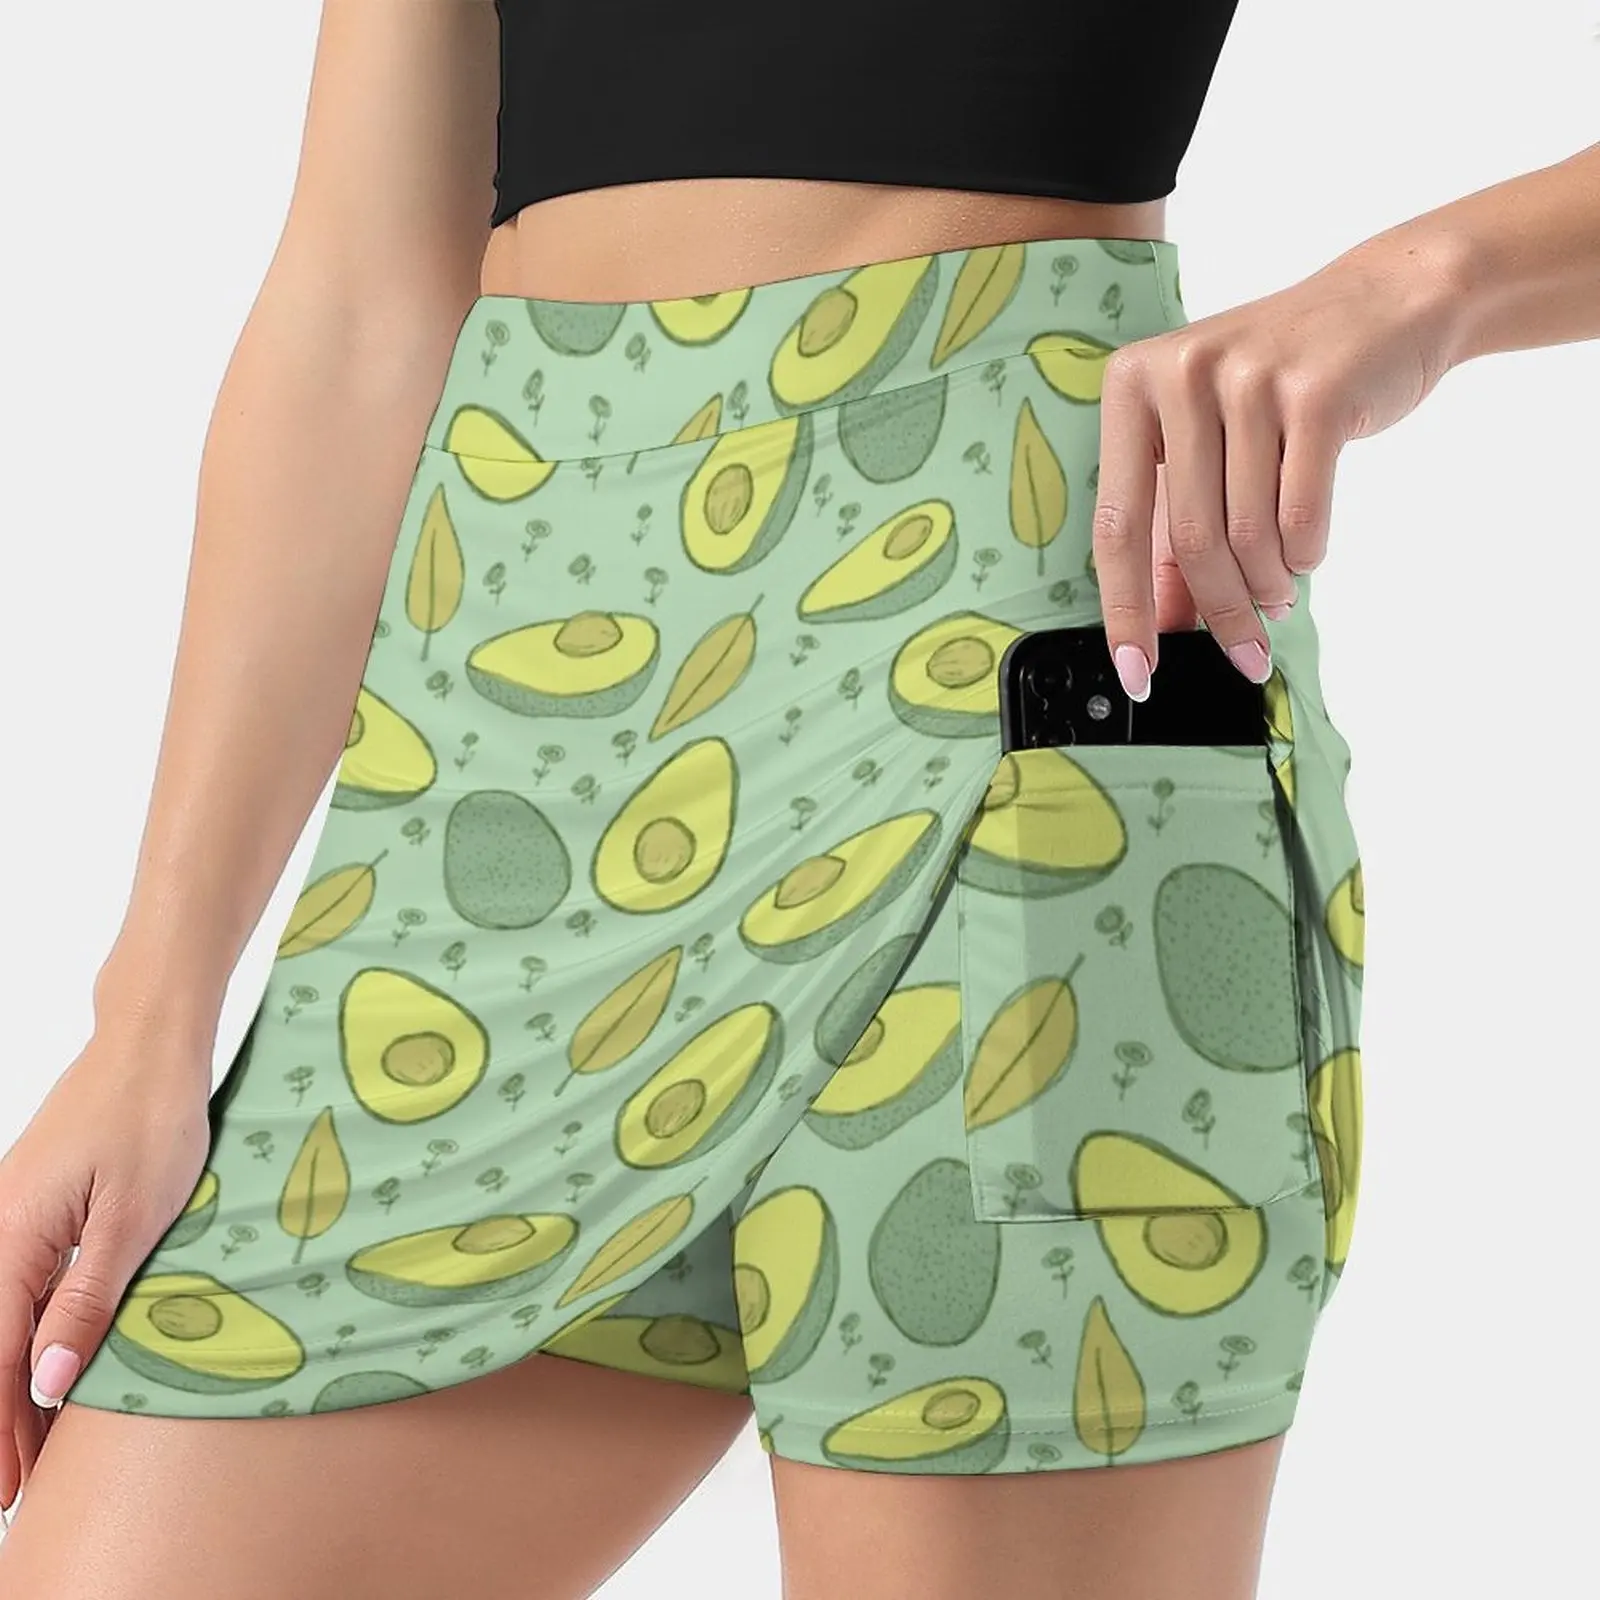 

Avocados Women'S Fashion Sporting Skirt With Pockets Tennis Golf Running Skirts Avocado Avocados Fruit Food Guac Jmhurd Foodie